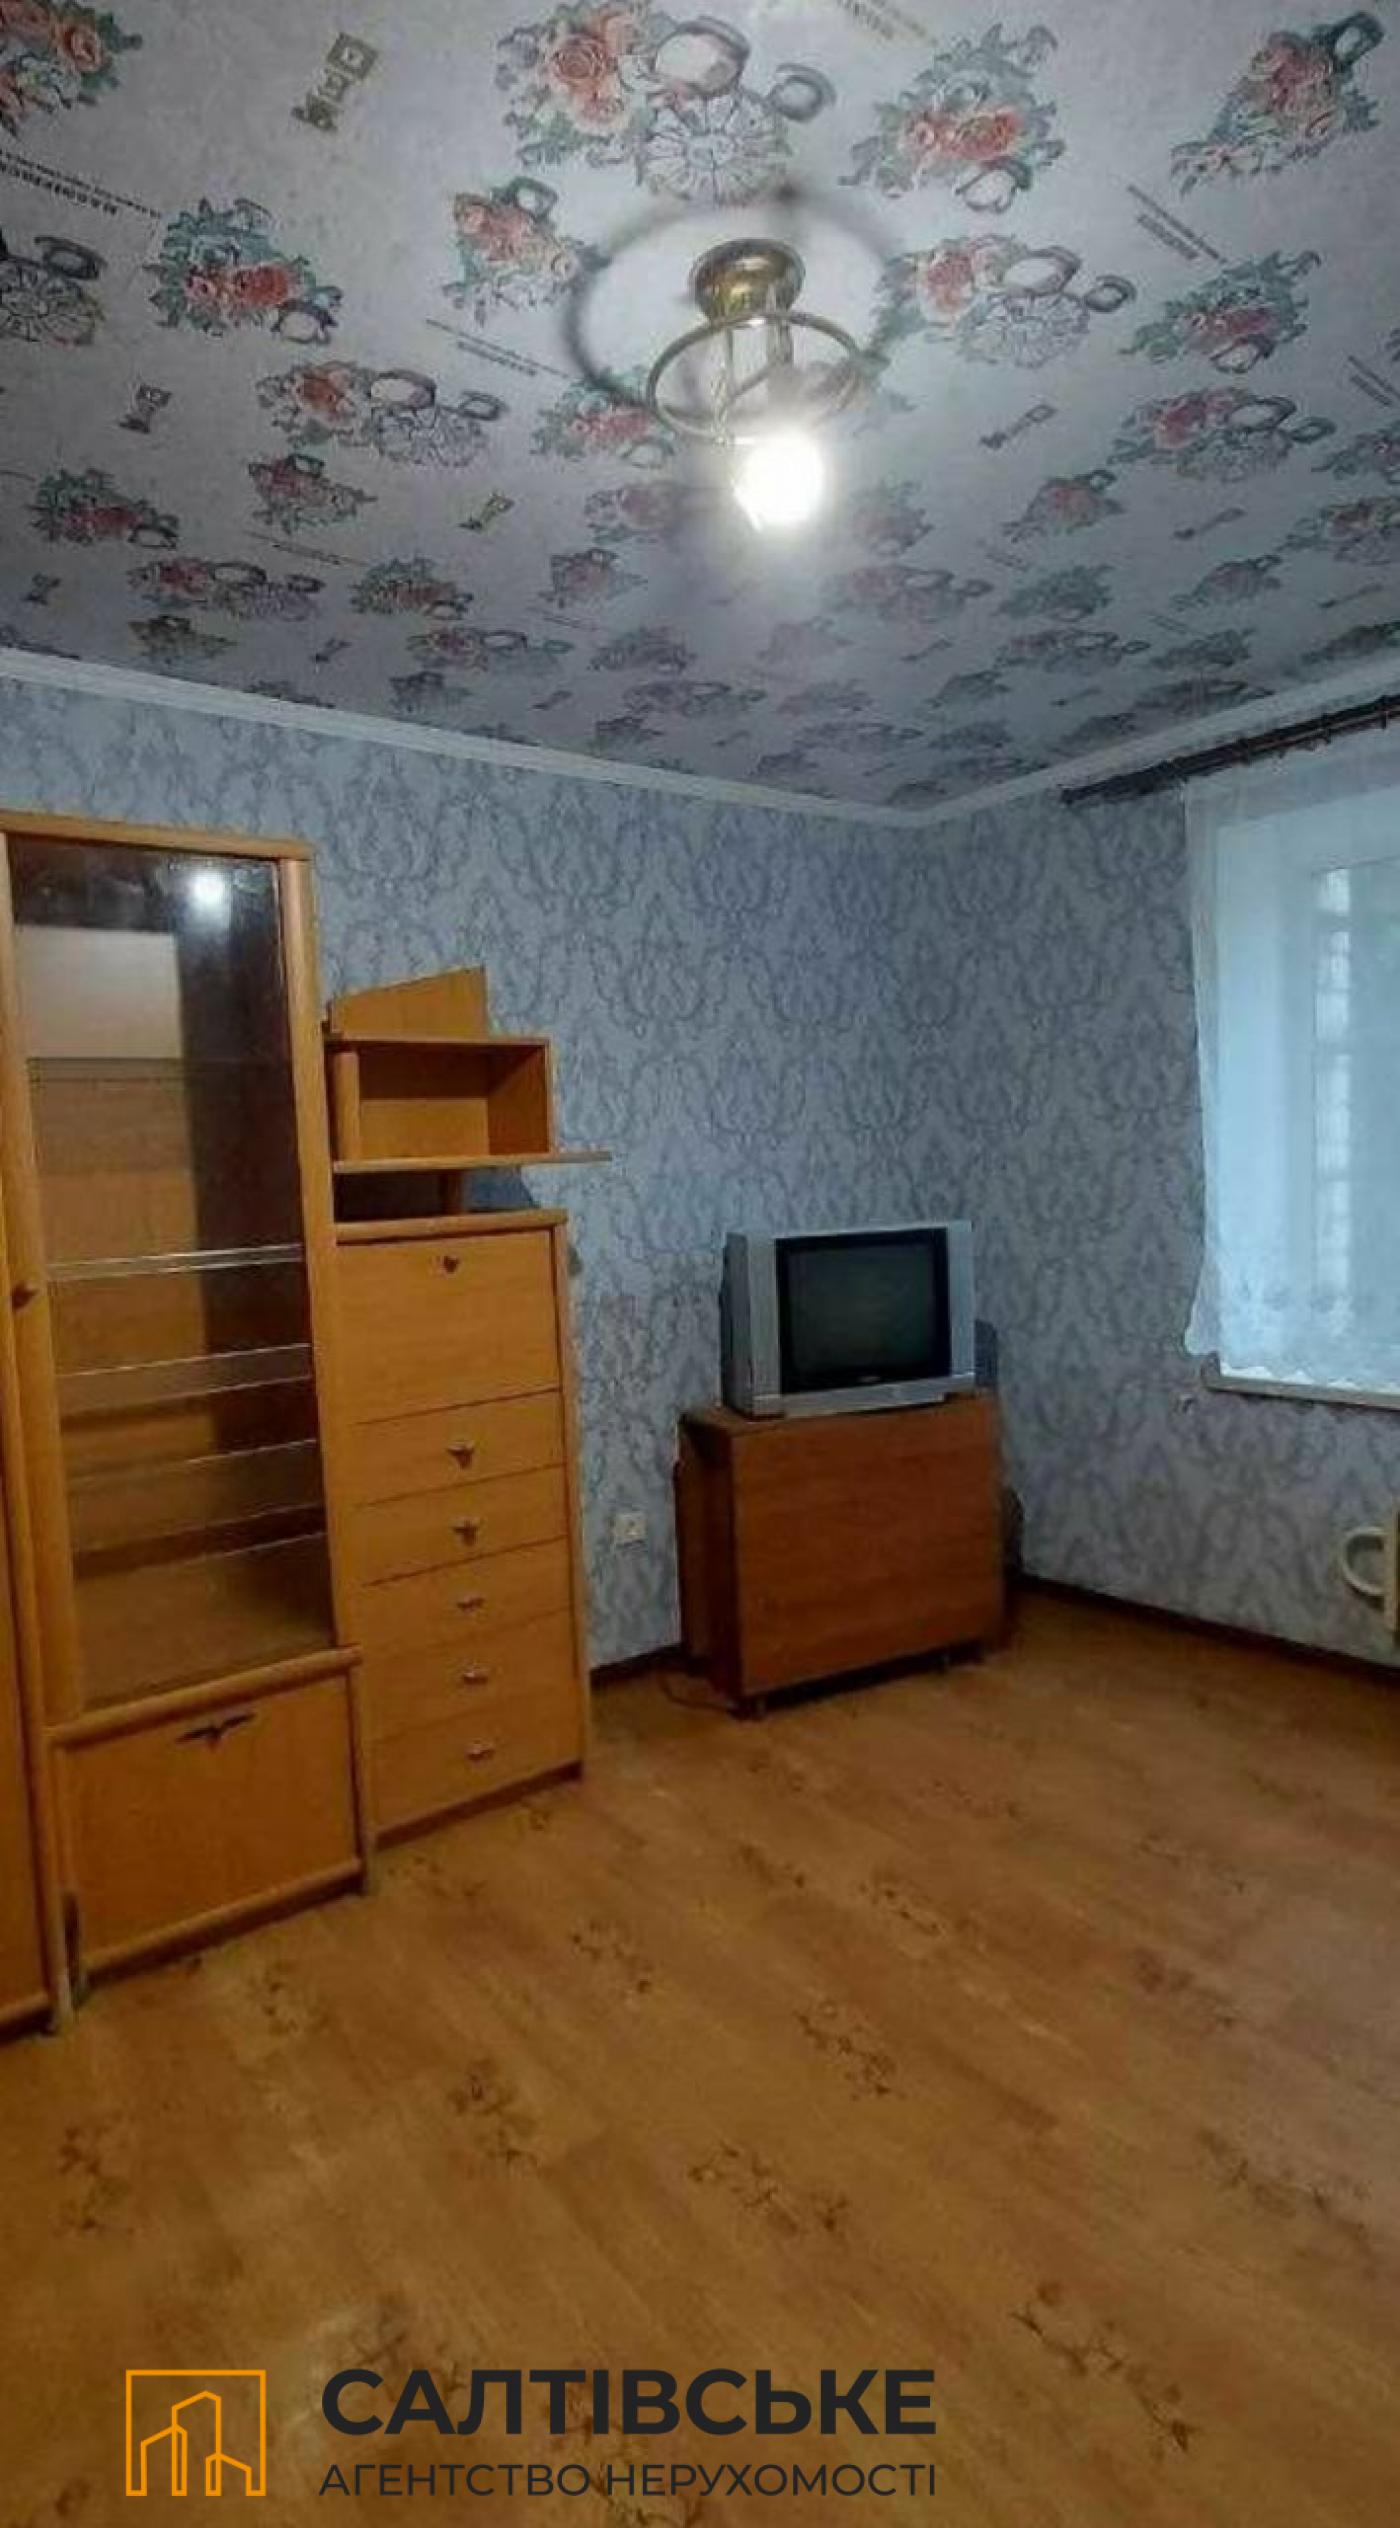 Продажа квартир Харьков